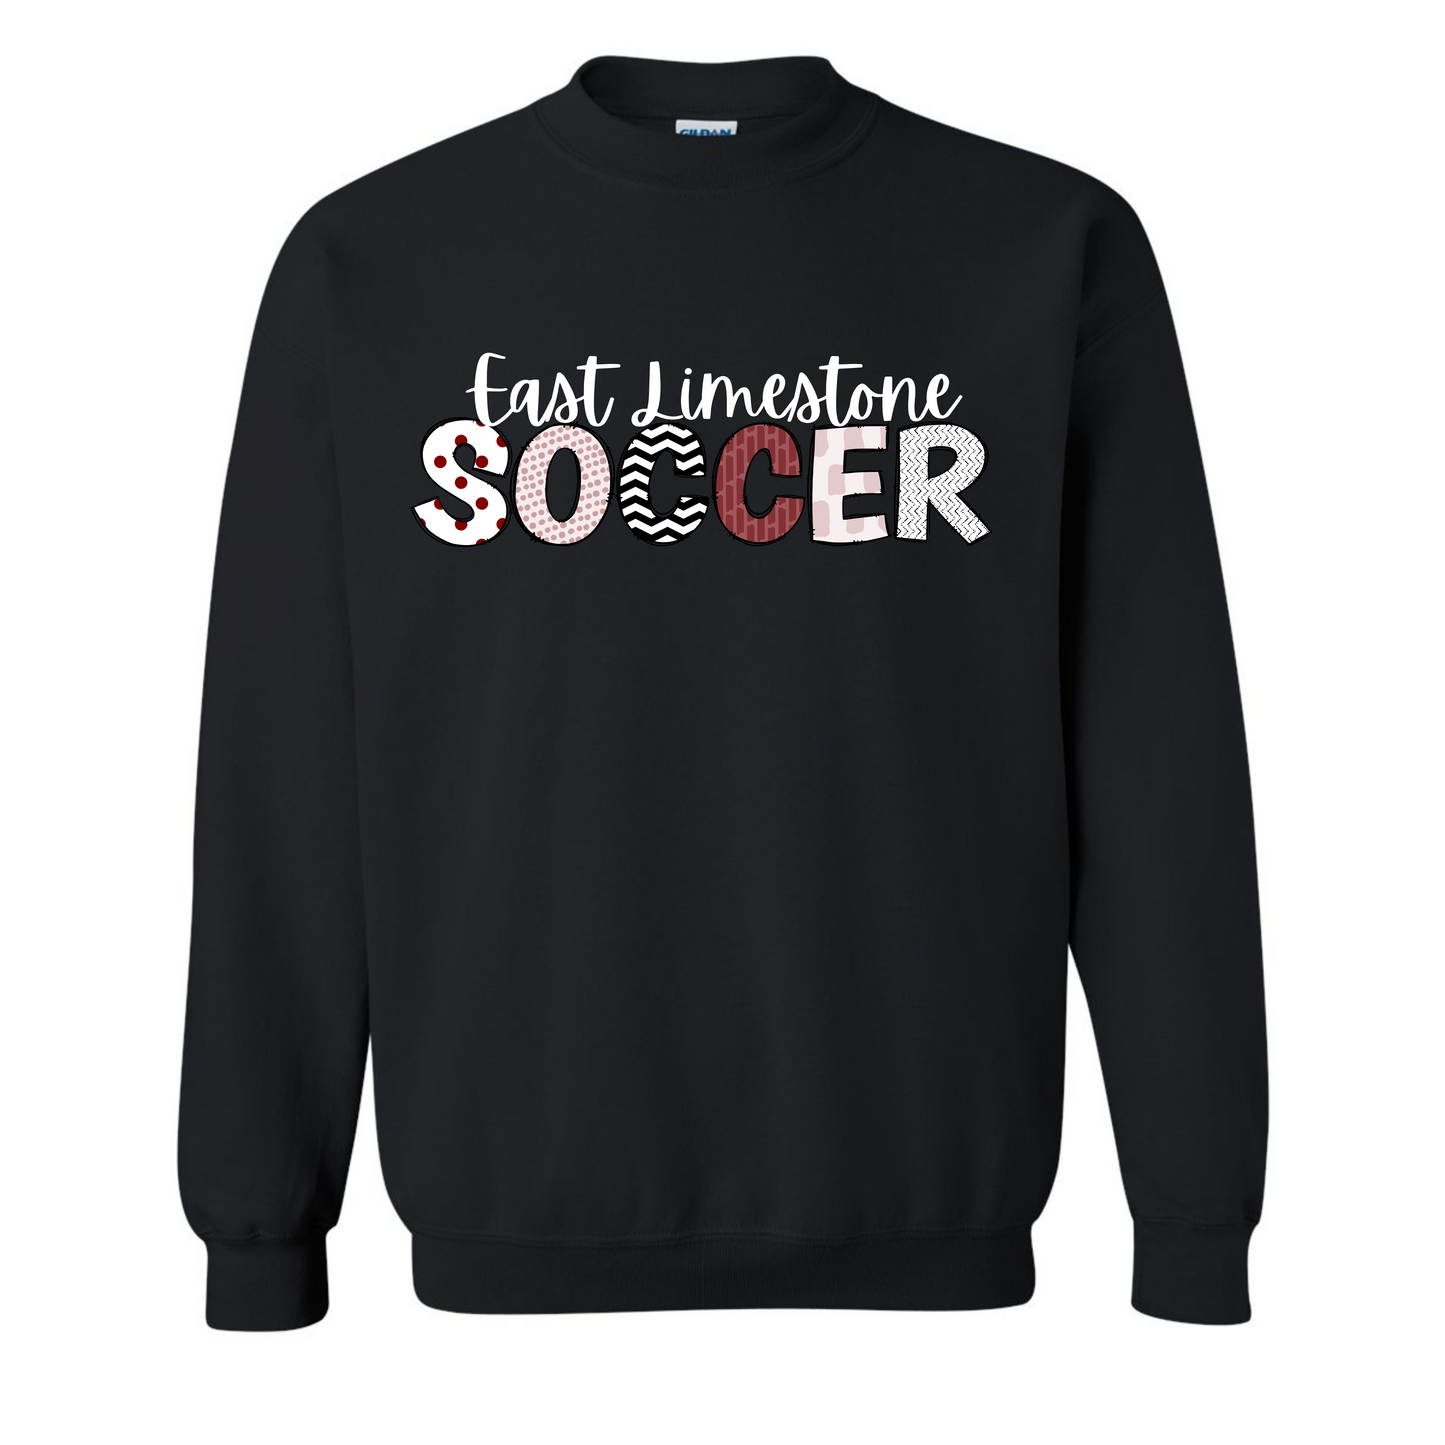 East Limestone Soccer